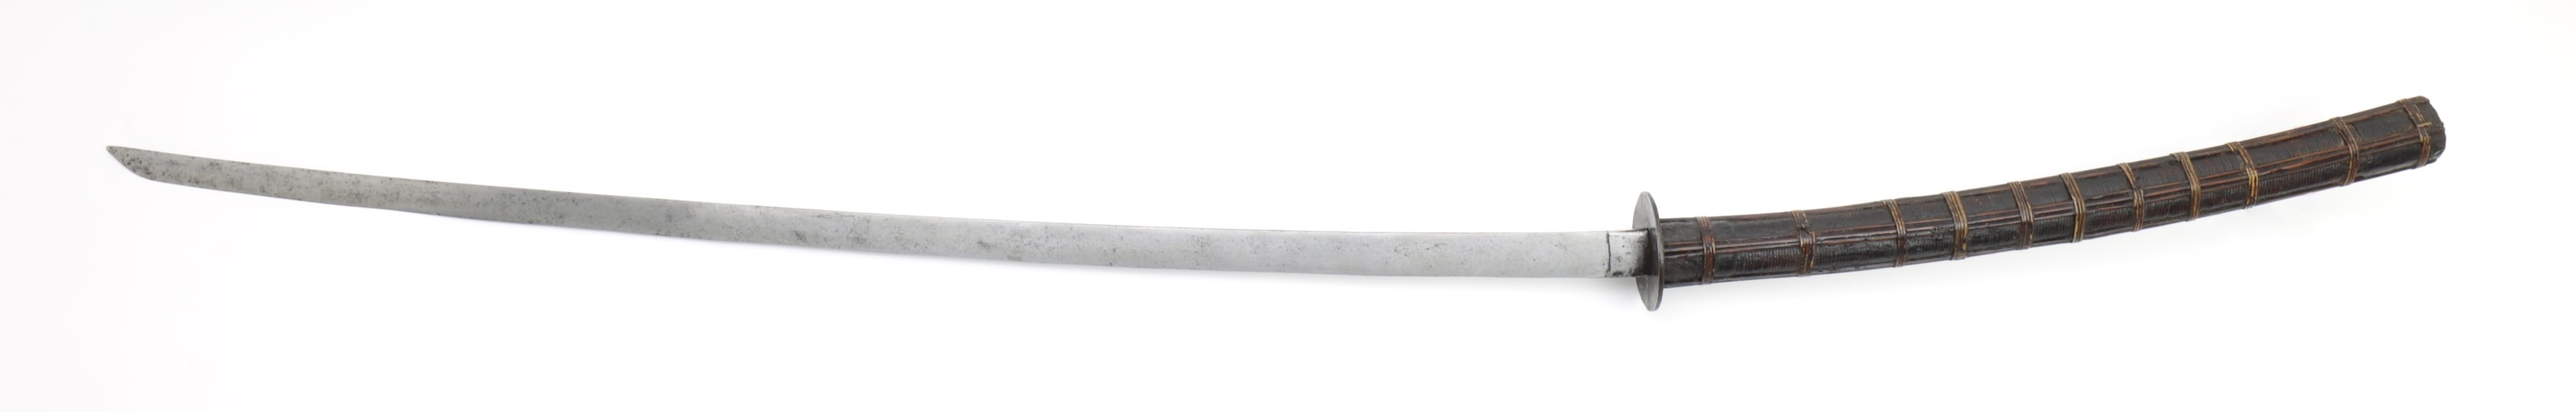 Cambodian long saber